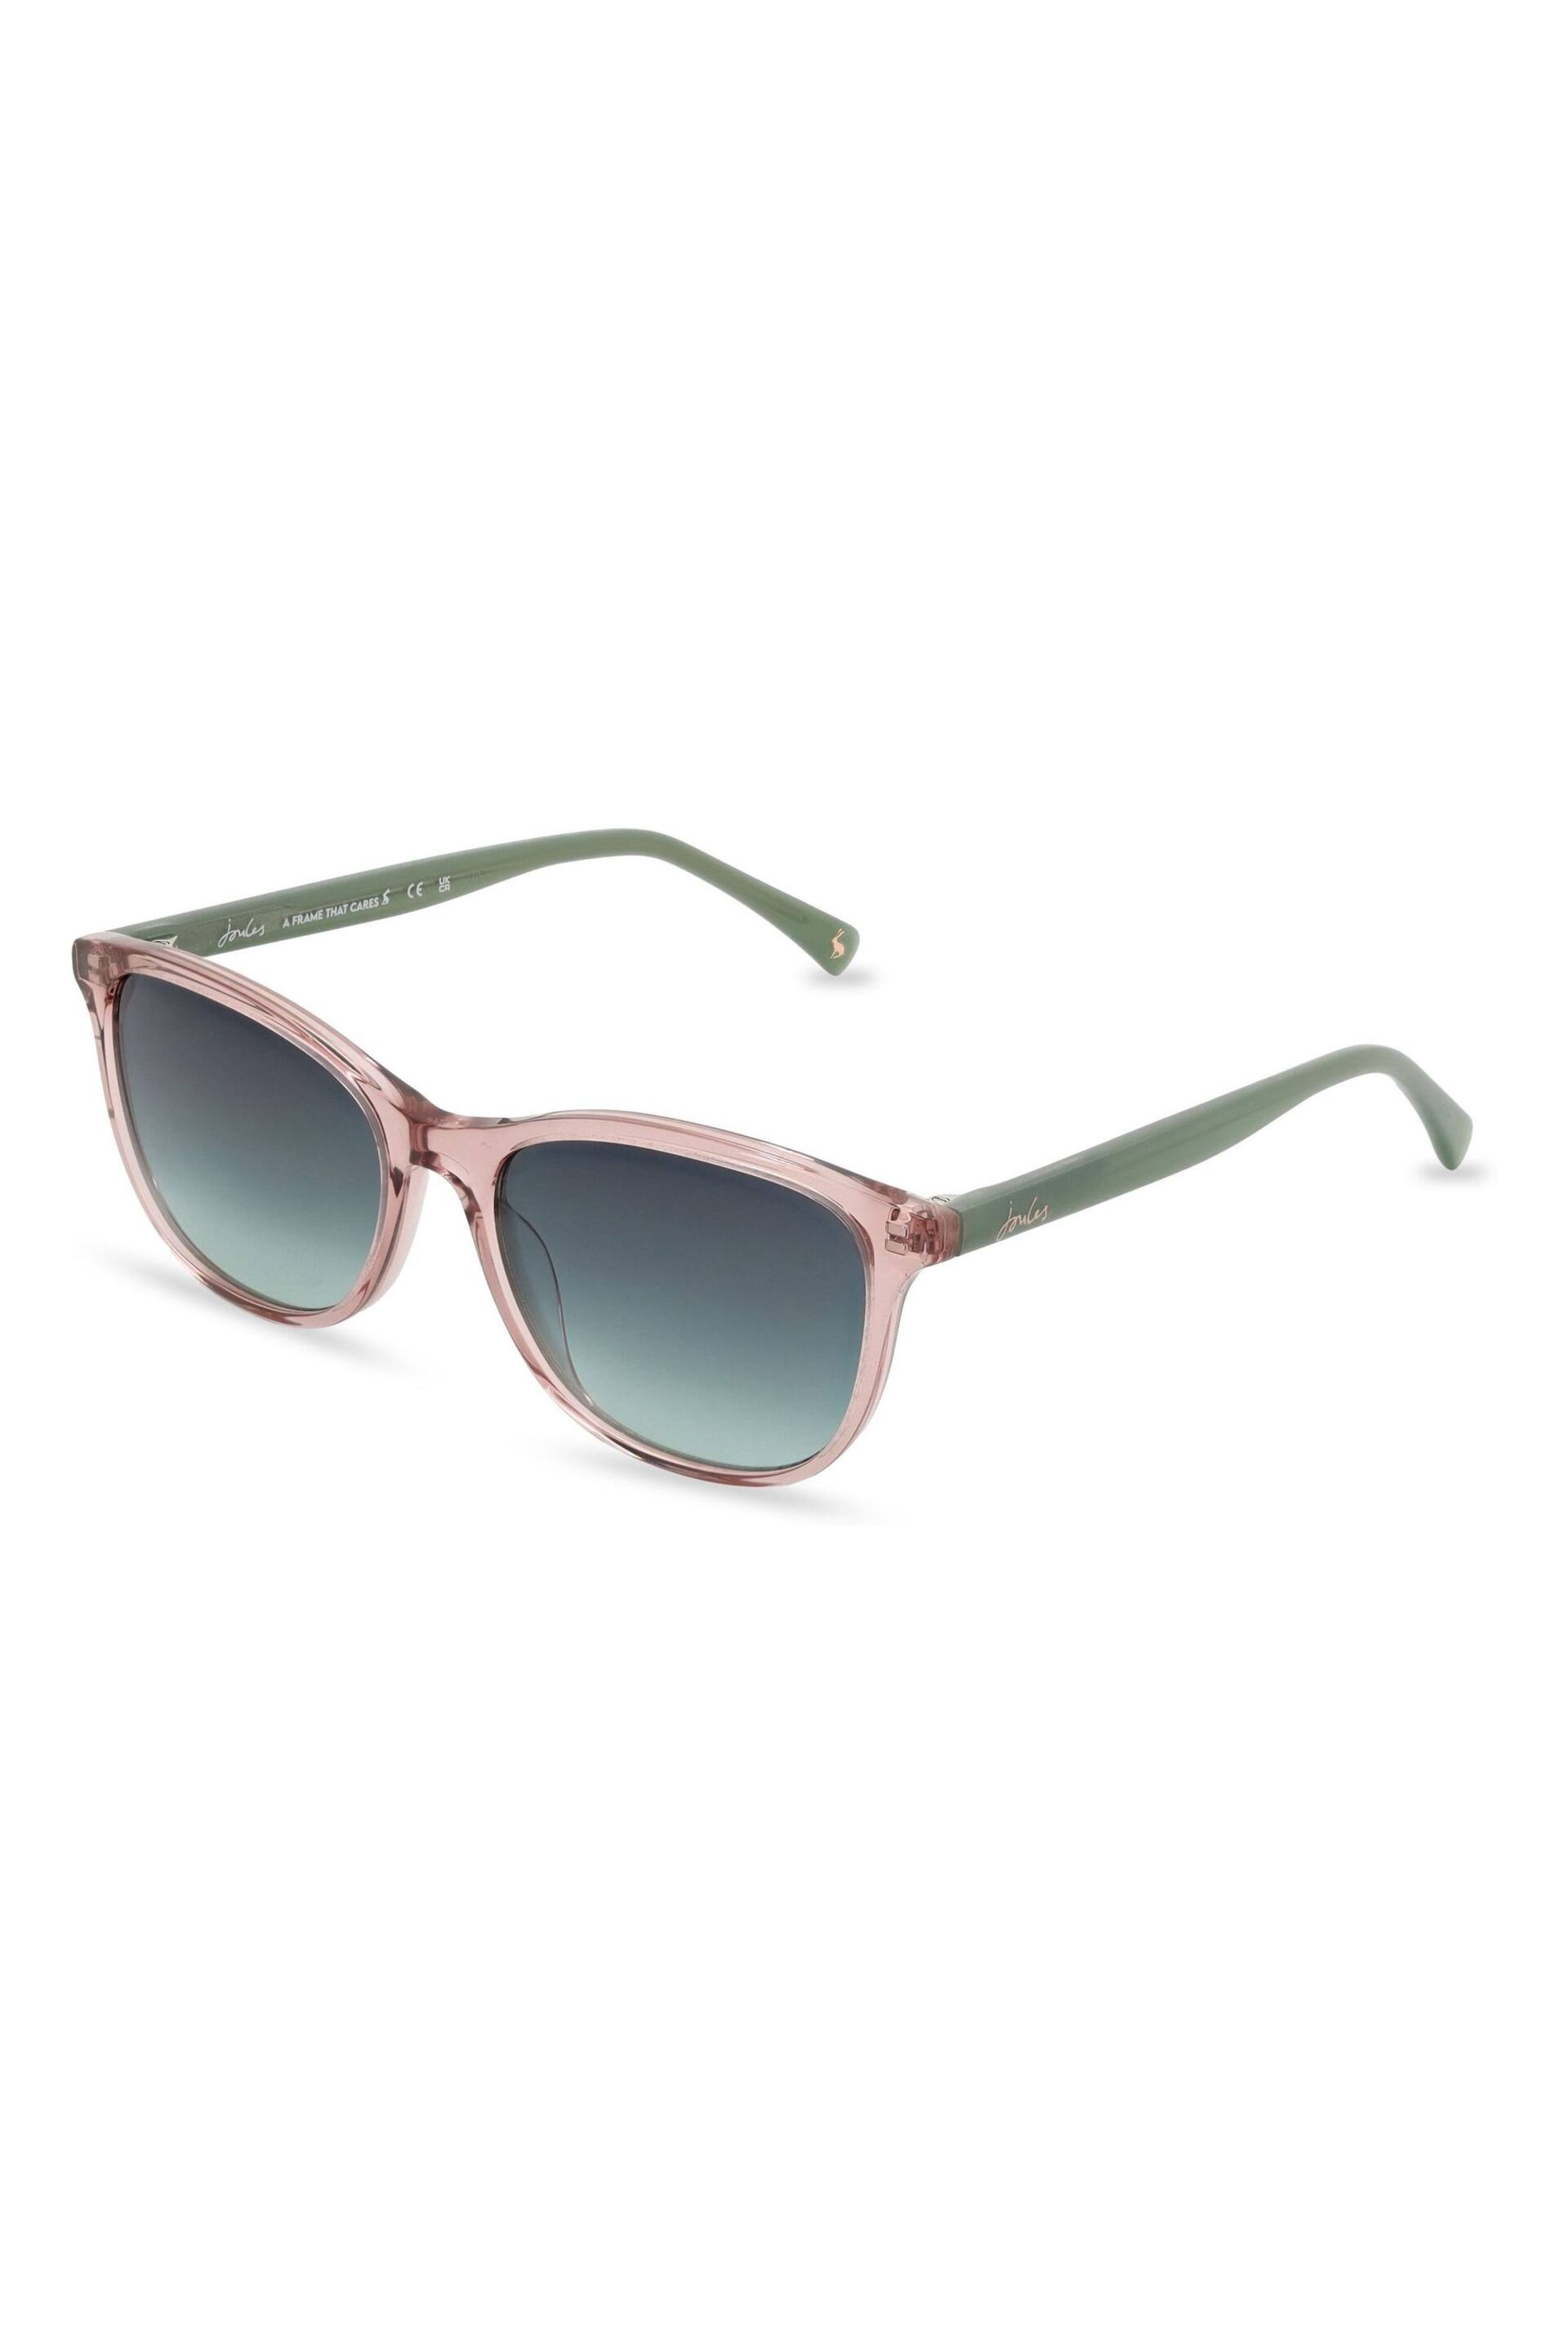 Joules Pink Petunia Sunglasses - Image 2 of 4